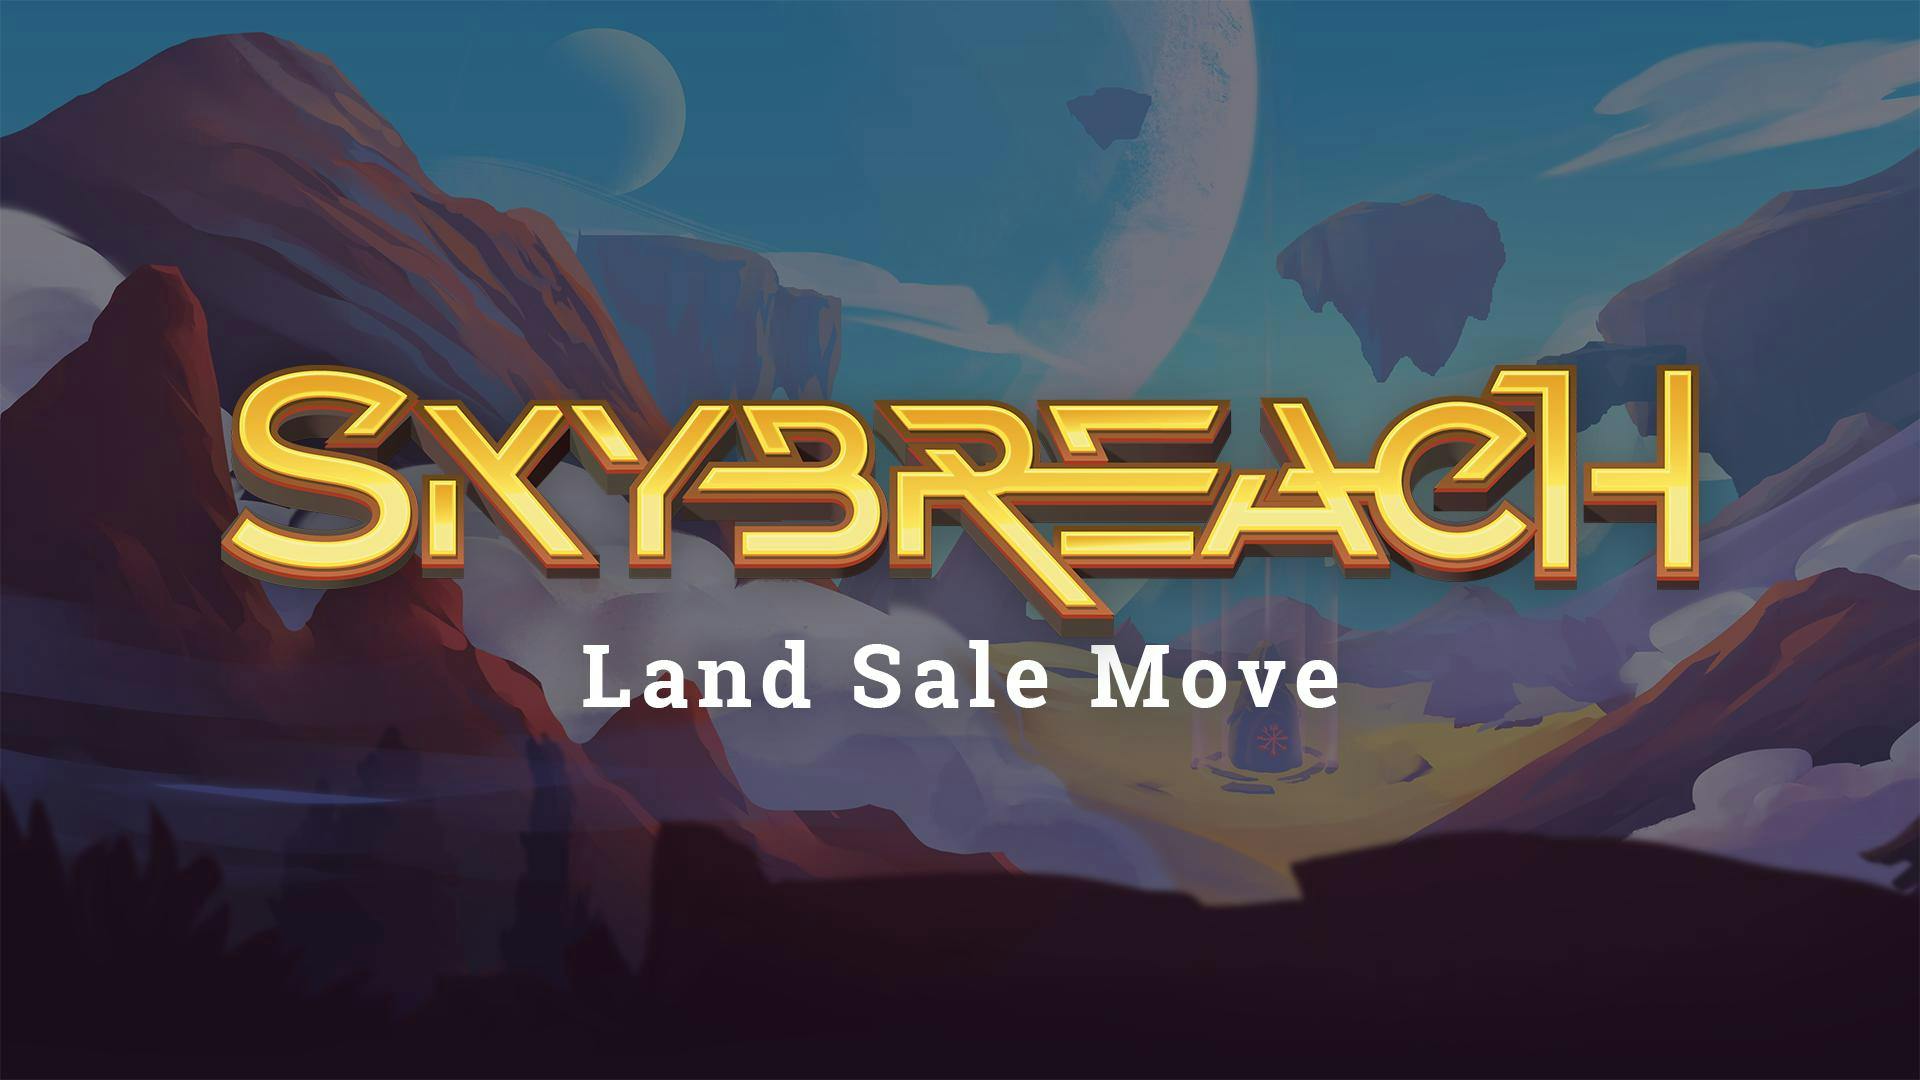 Skybreach Land Sale Move